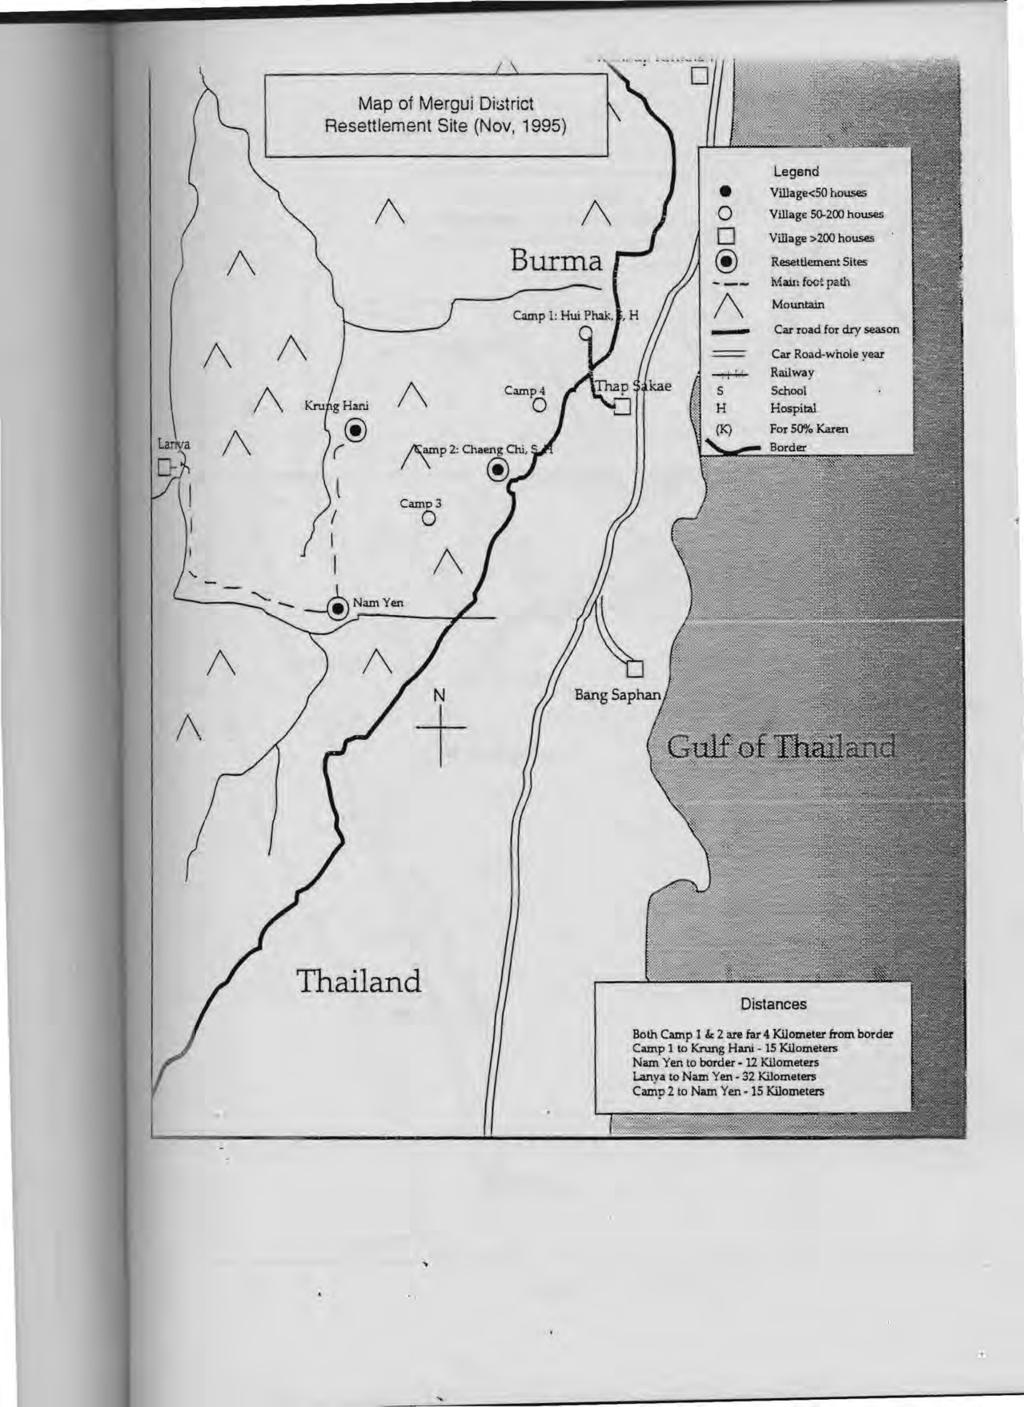 / / / / / Map of Mergui Dh5trict Resettlement Site (Nov, 1995) / Legend Village<SO hou.